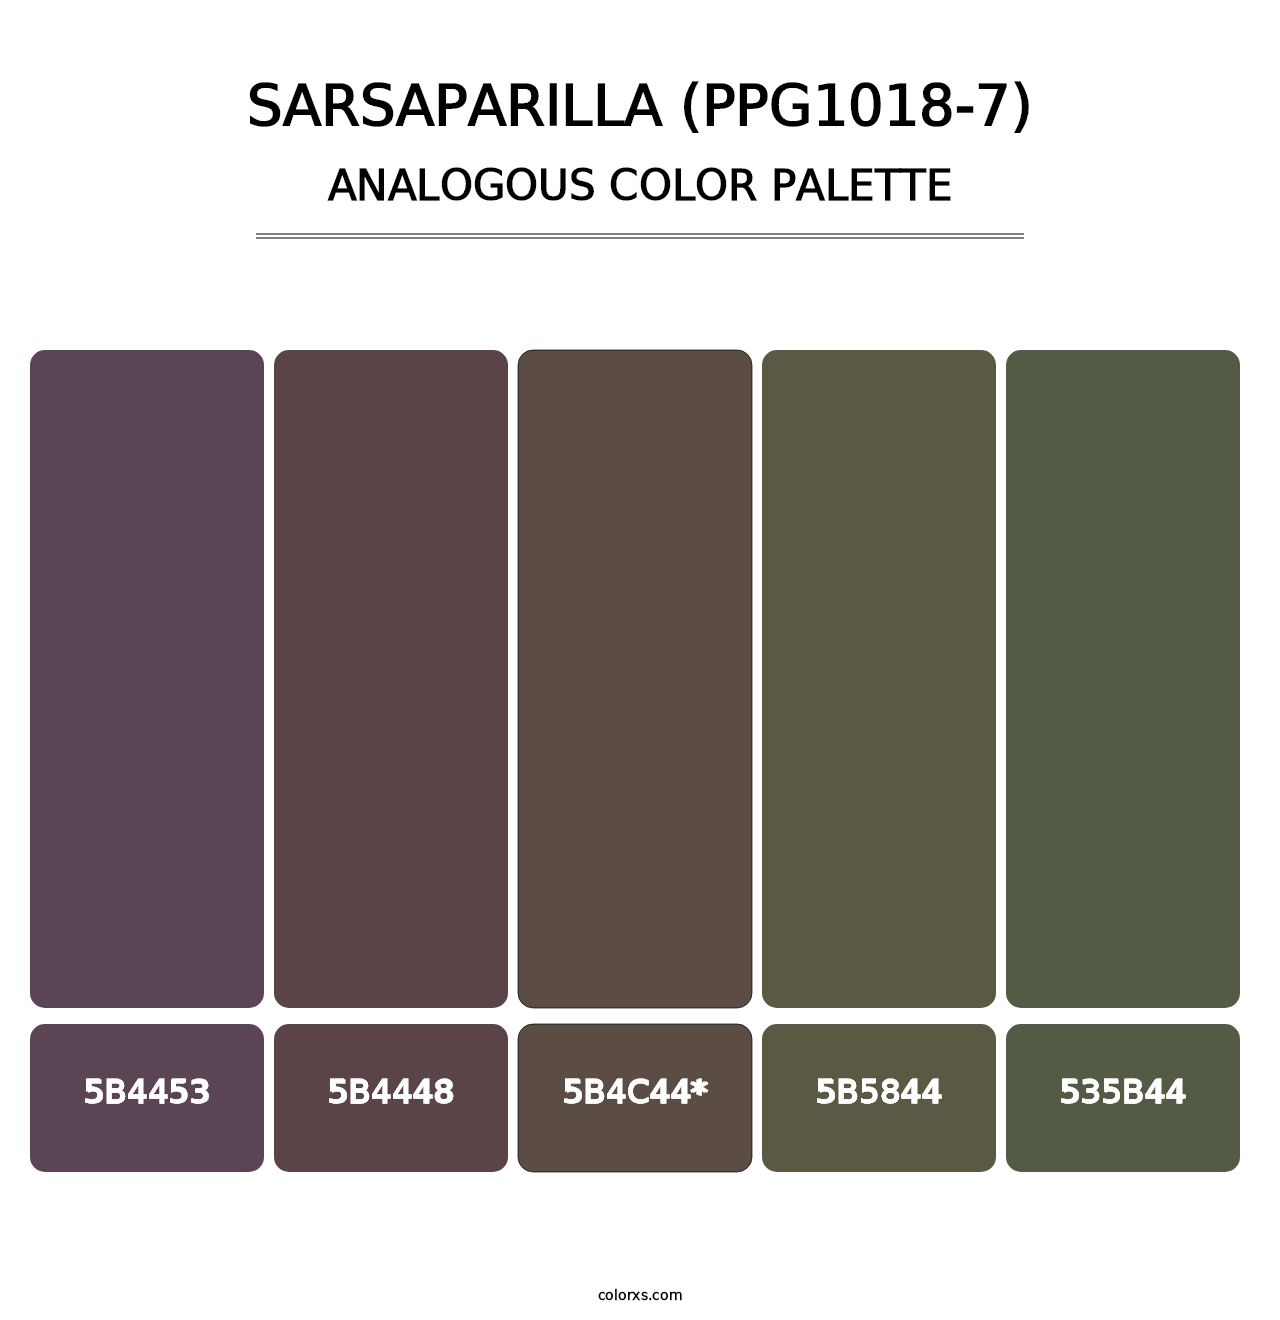 Sarsaparilla (PPG1018-7) - Analogous Color Palette